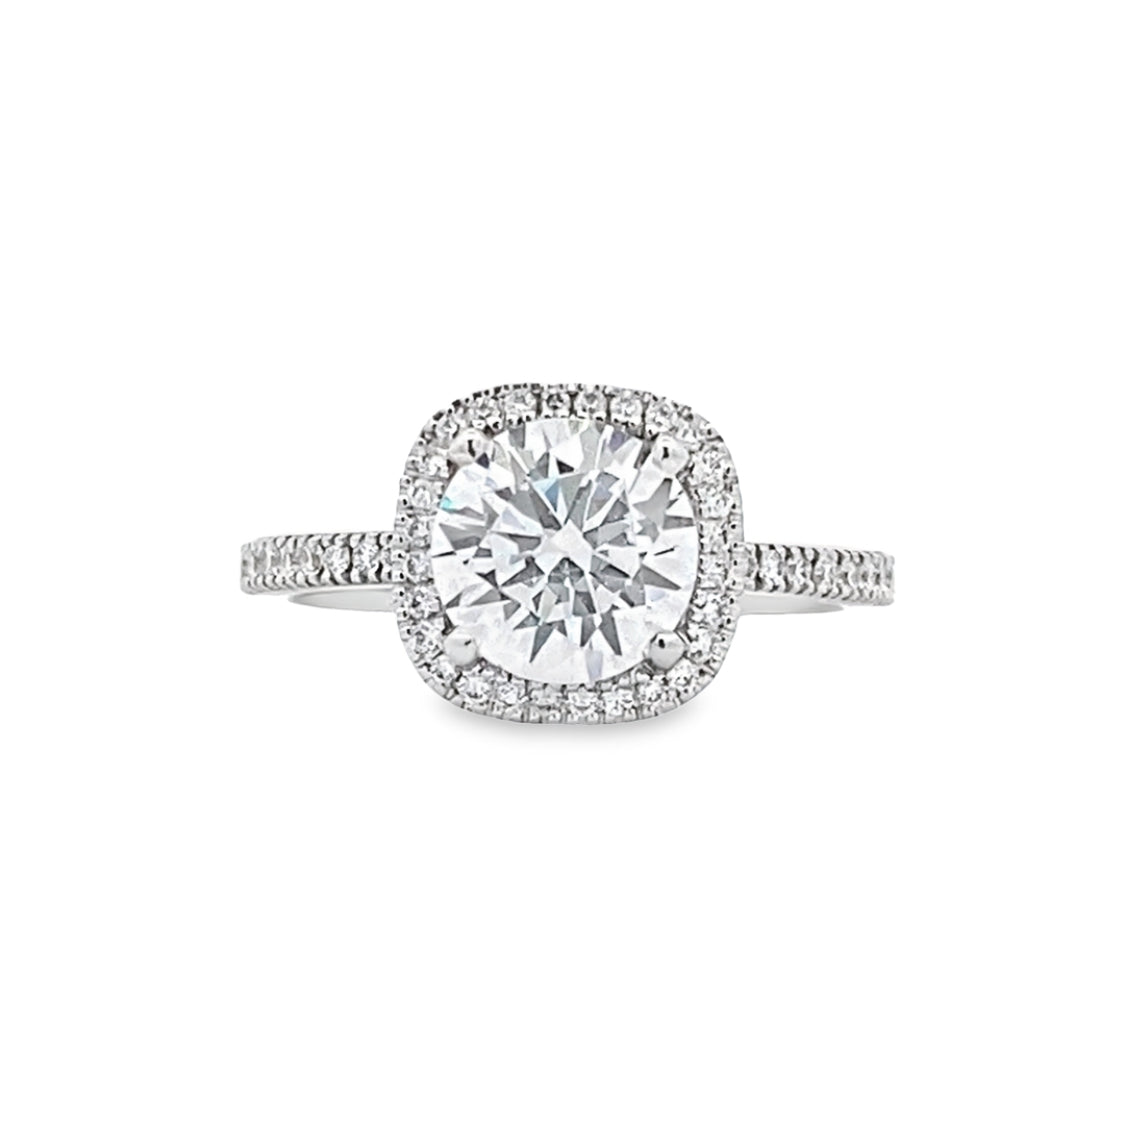 Simon G Jewelry 18 Karat White Gold Halo Round Shape Engagement Ring MR1840-A/366528